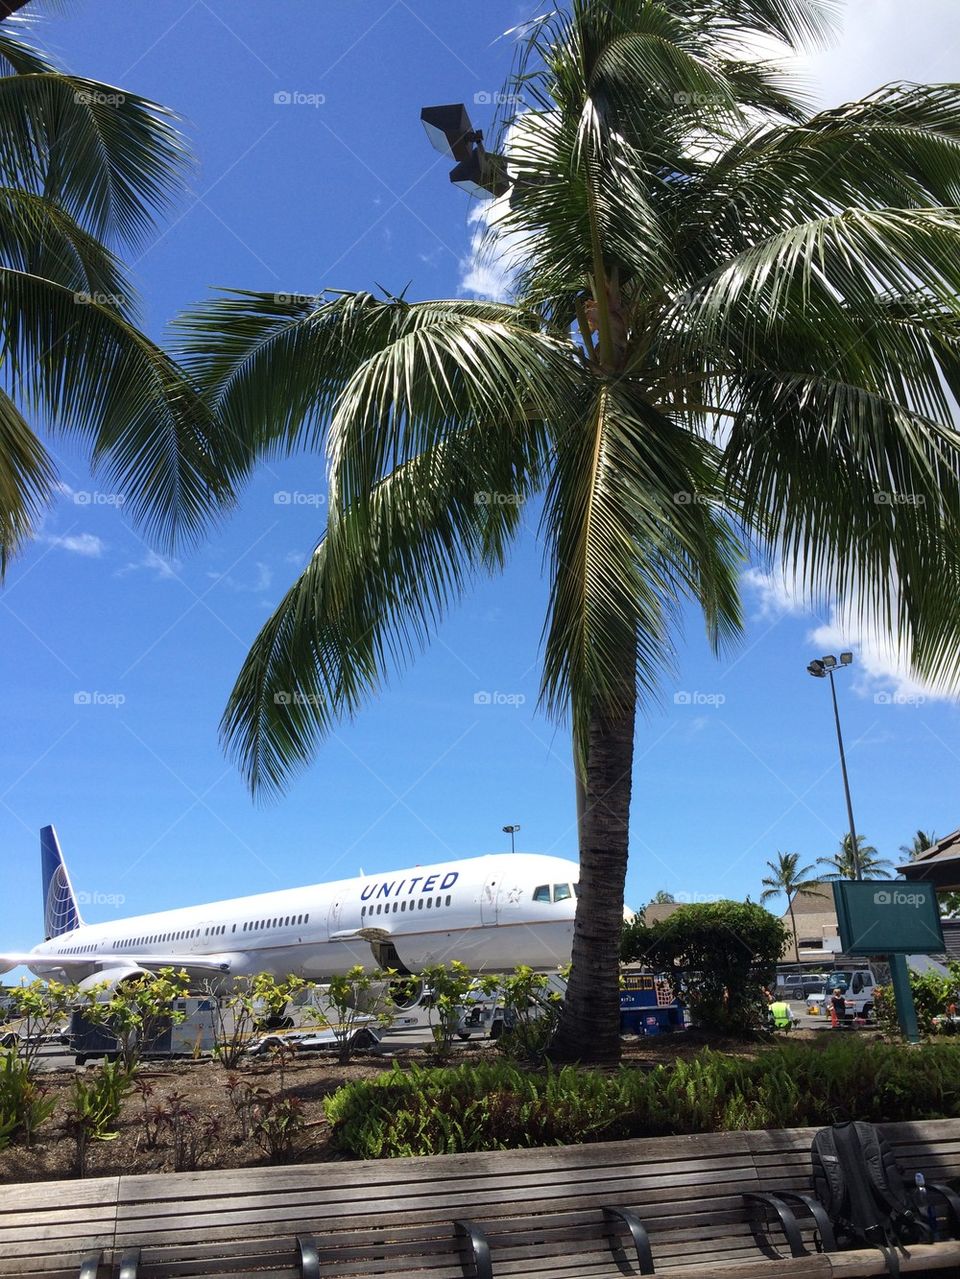 Kona Hawaii airport. United airlines